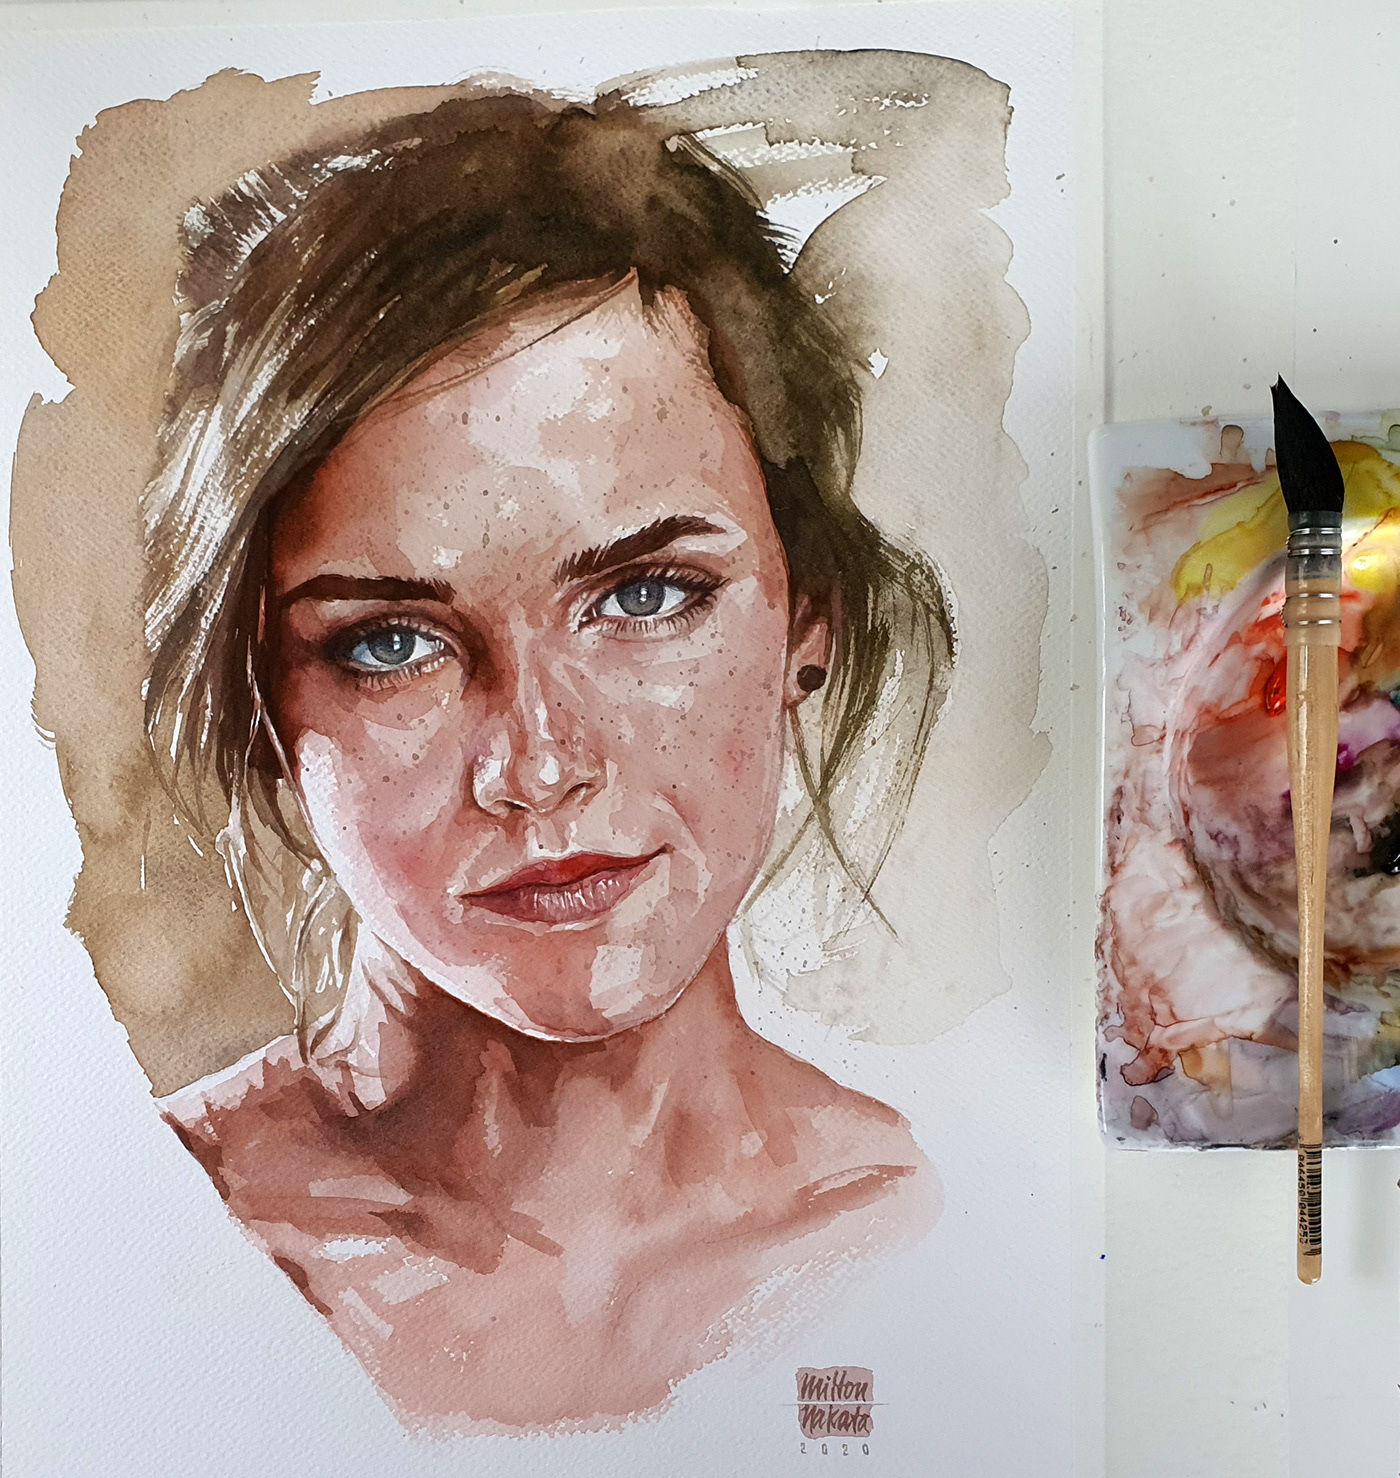 Watercolor exercise - Emma Watson fanart on Behance